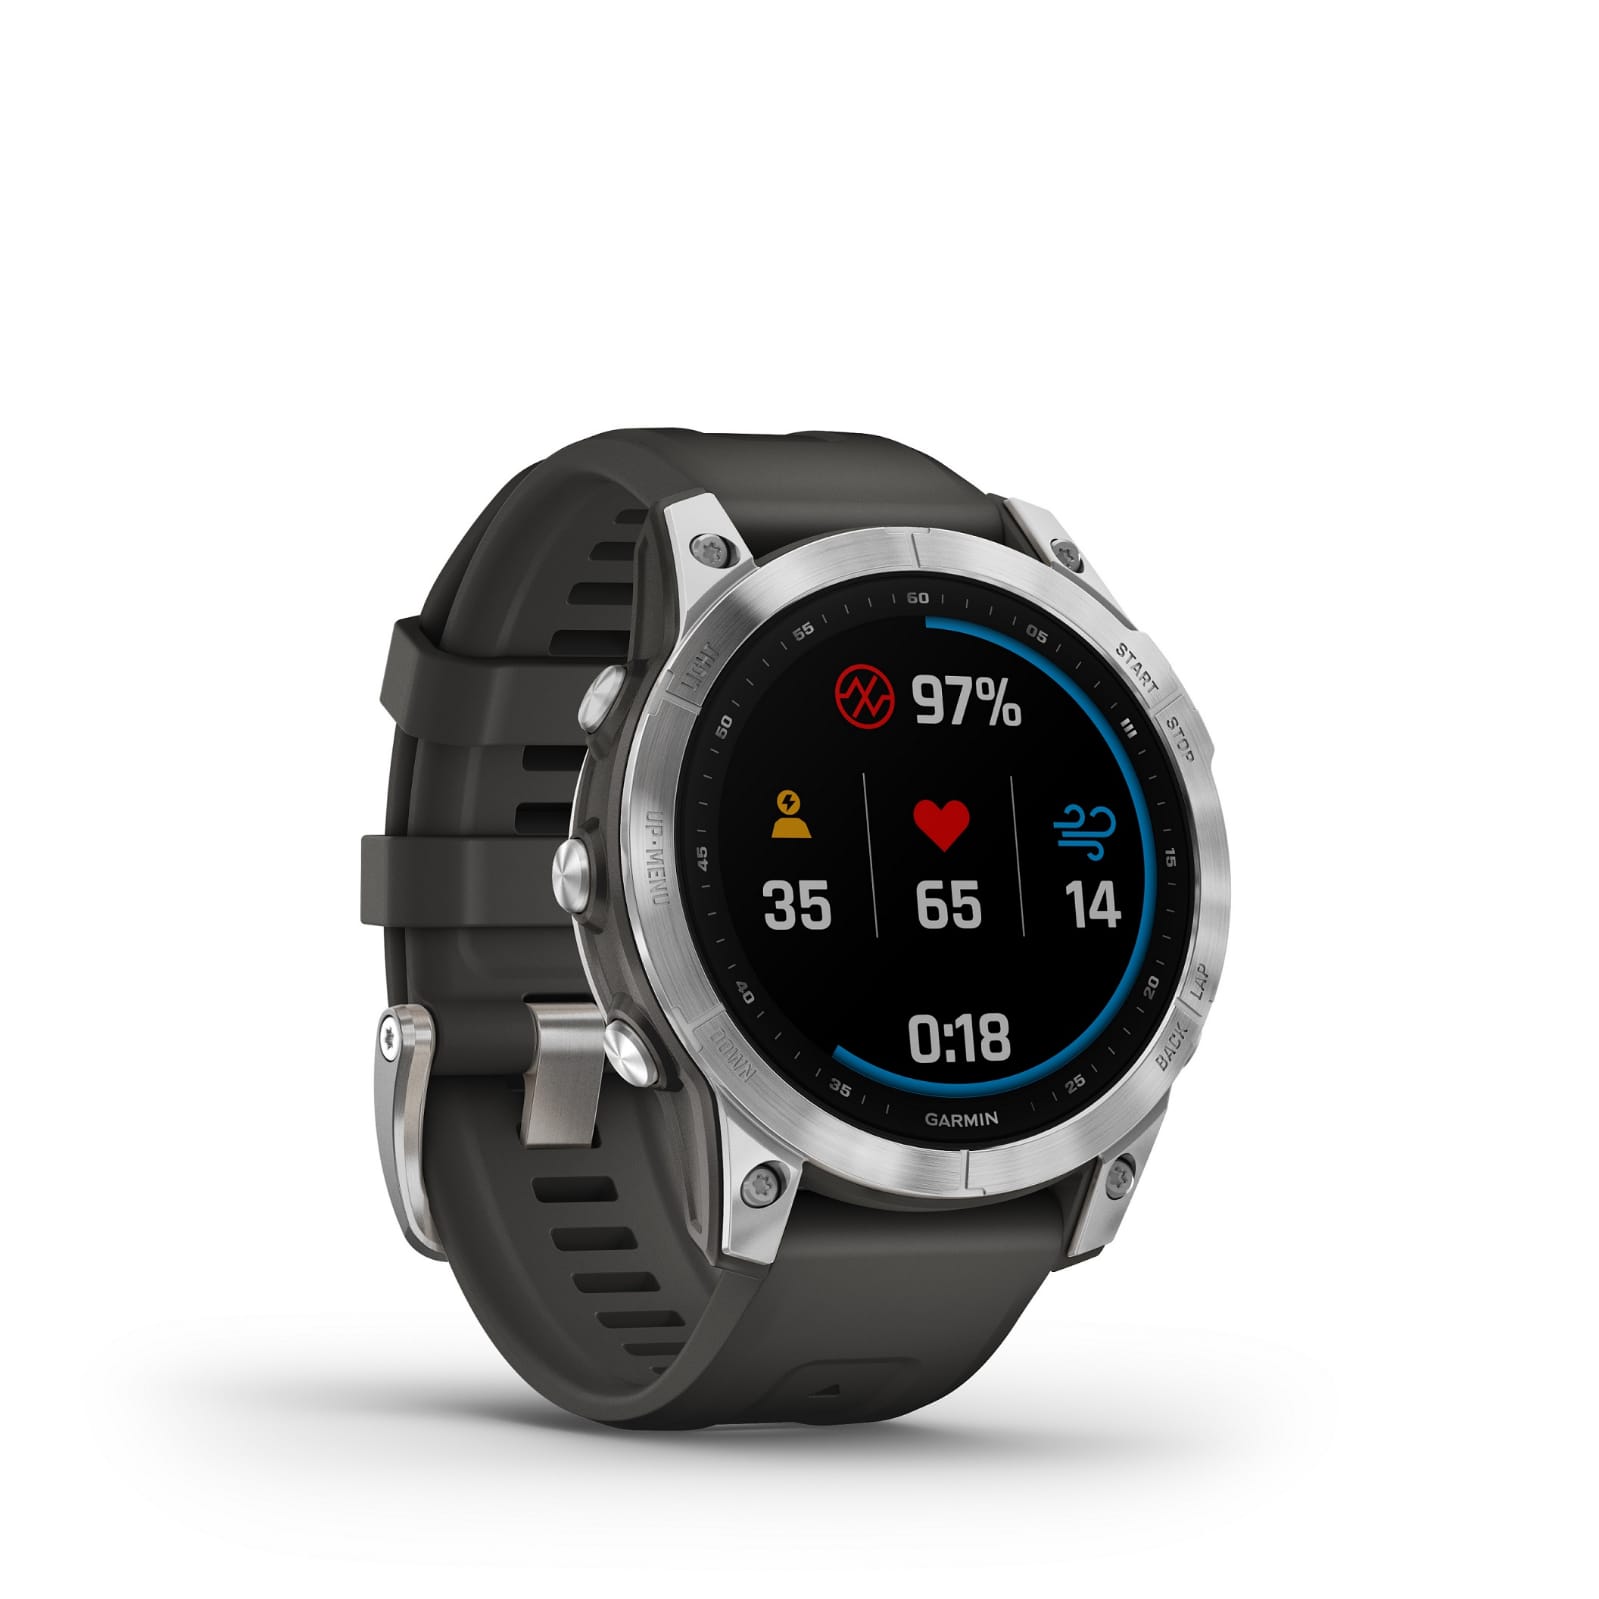 Garmin introduces epix, a premium multisport smartwatch